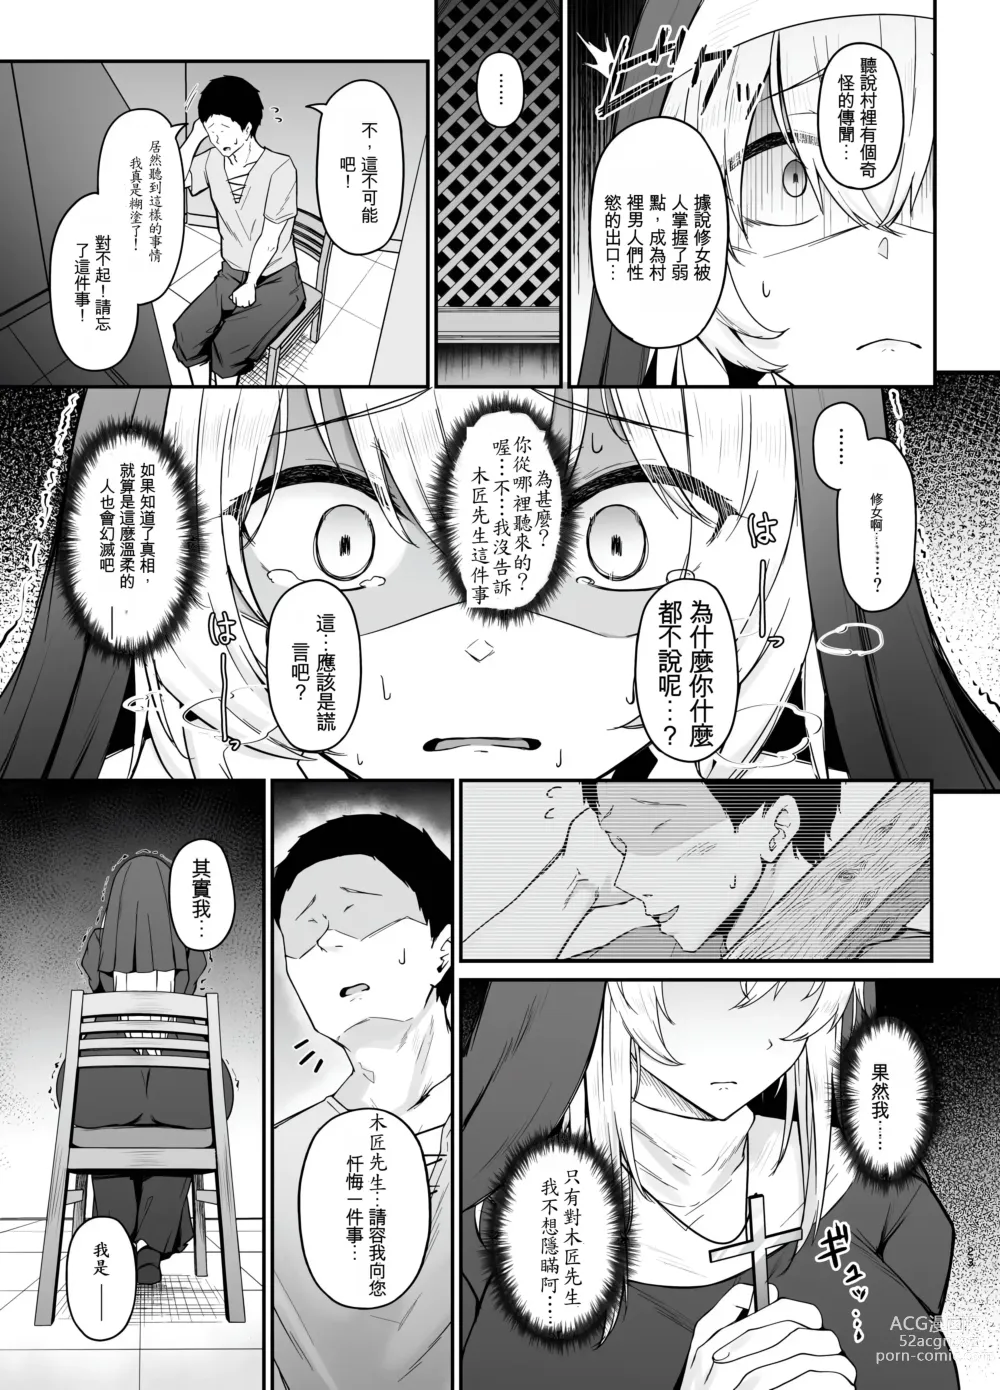 Page 22 of doujinshi 你討厭沒有品味的女人嗎?